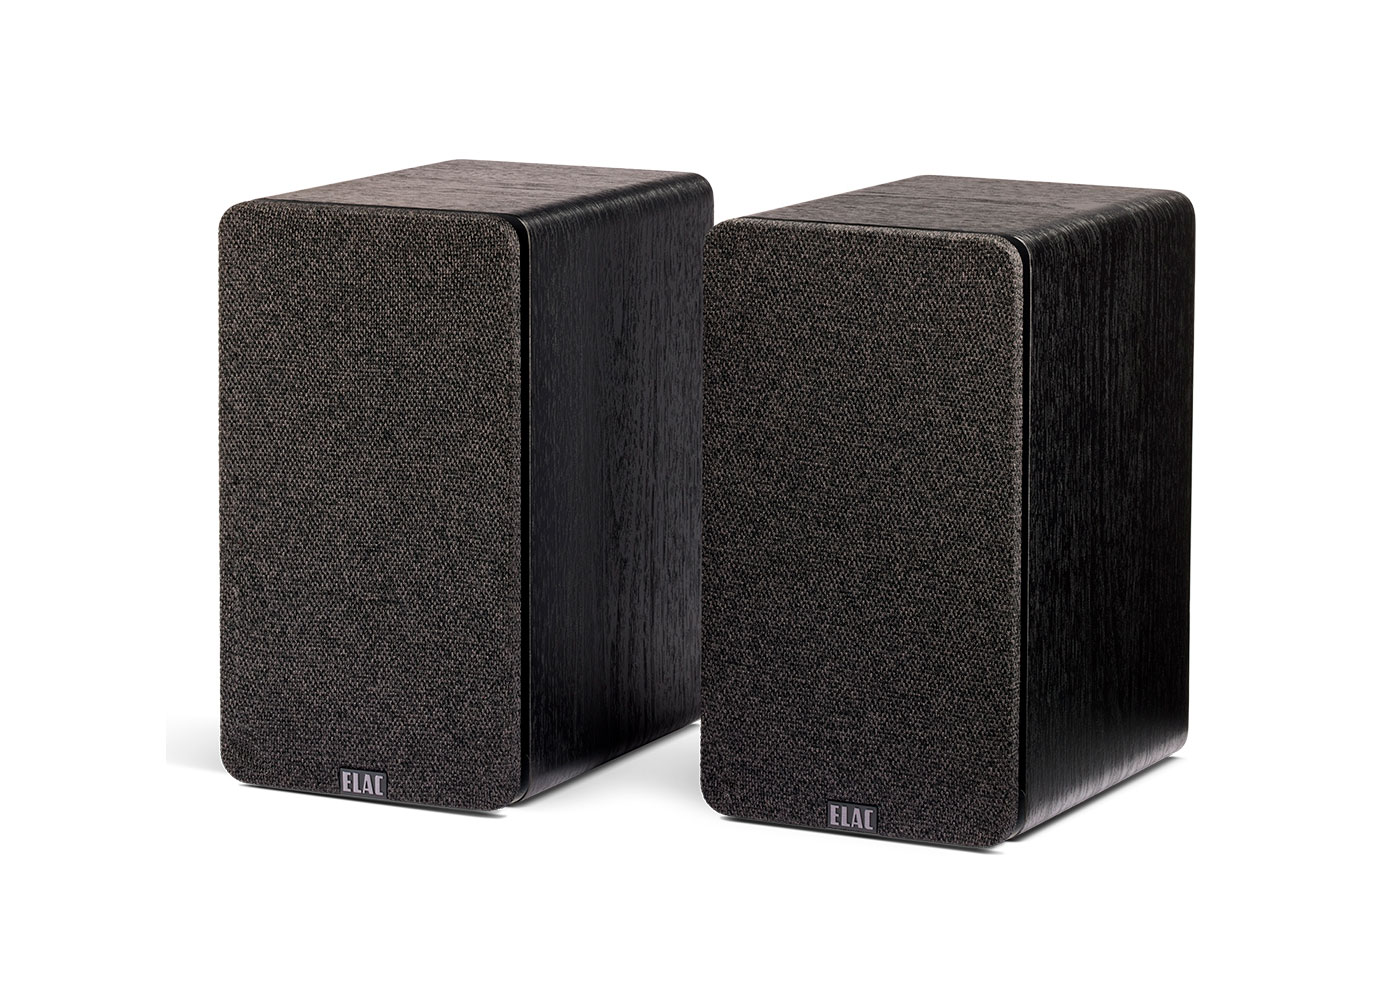 Debut Connex Dcb-41 
Powered Speakers (Black)